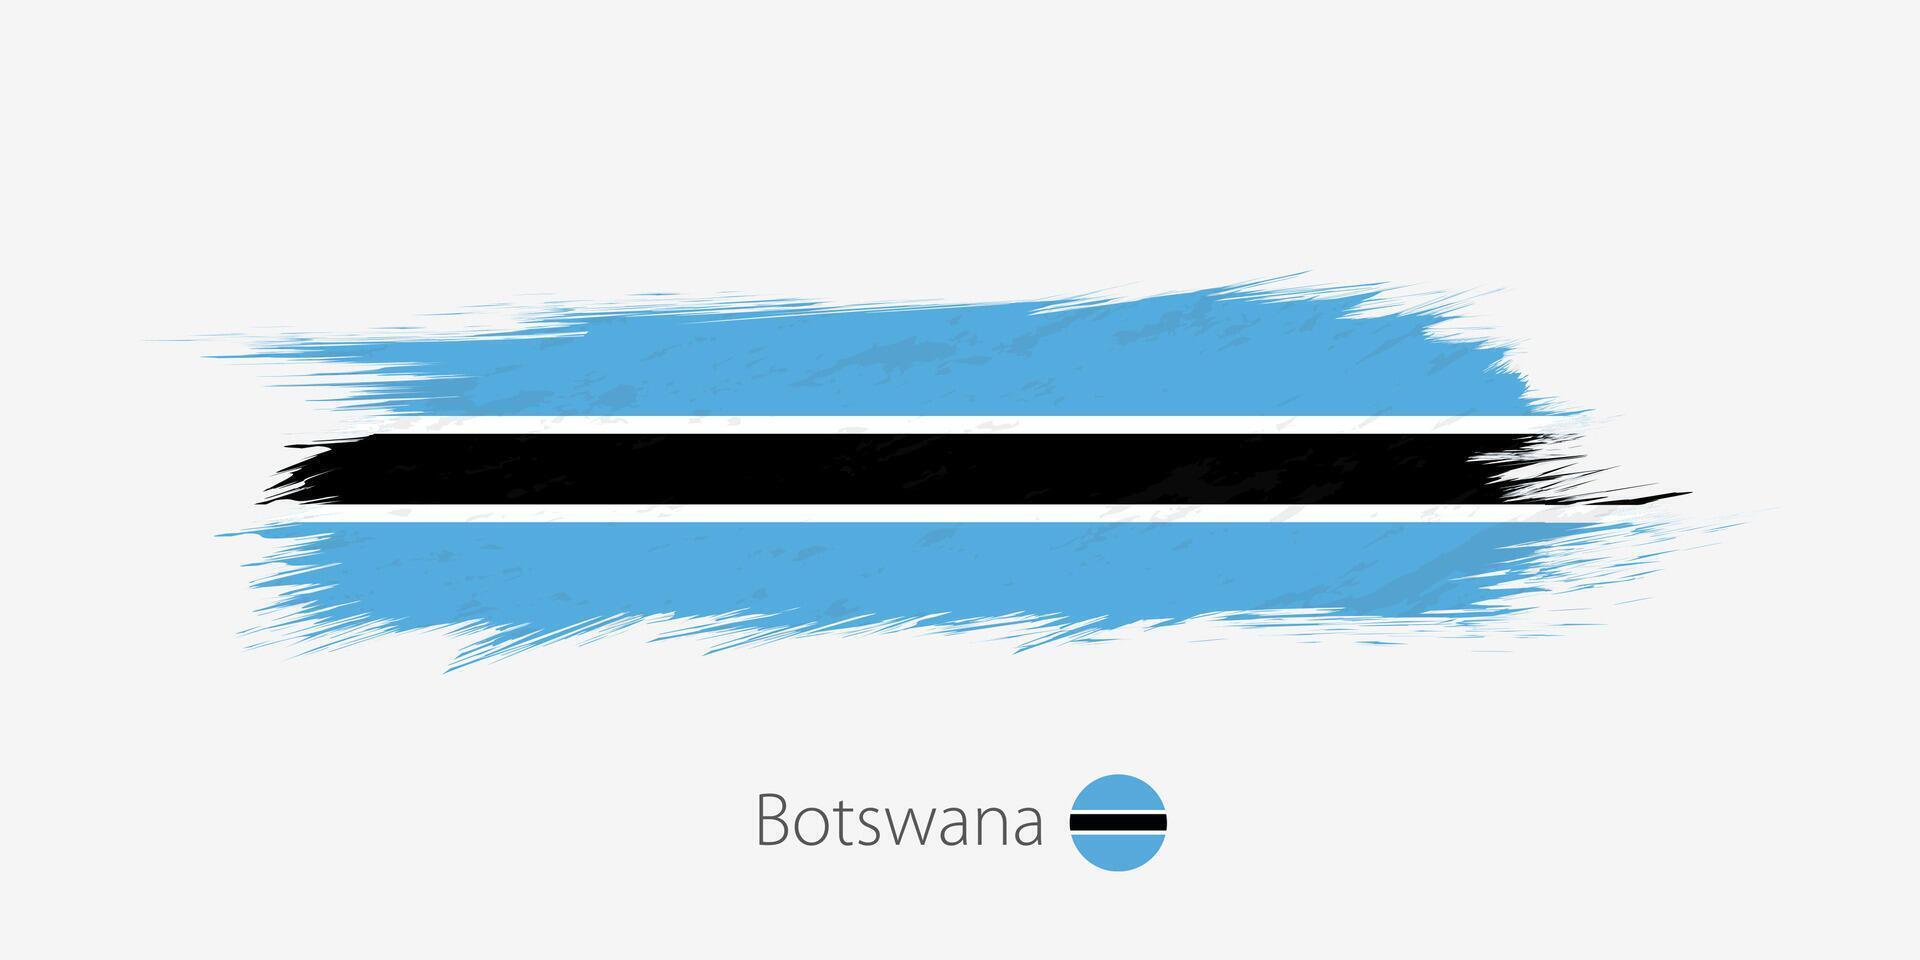 flagga av botswana, grunge abstrakt borsta stroke på grå bakgrund. vektor